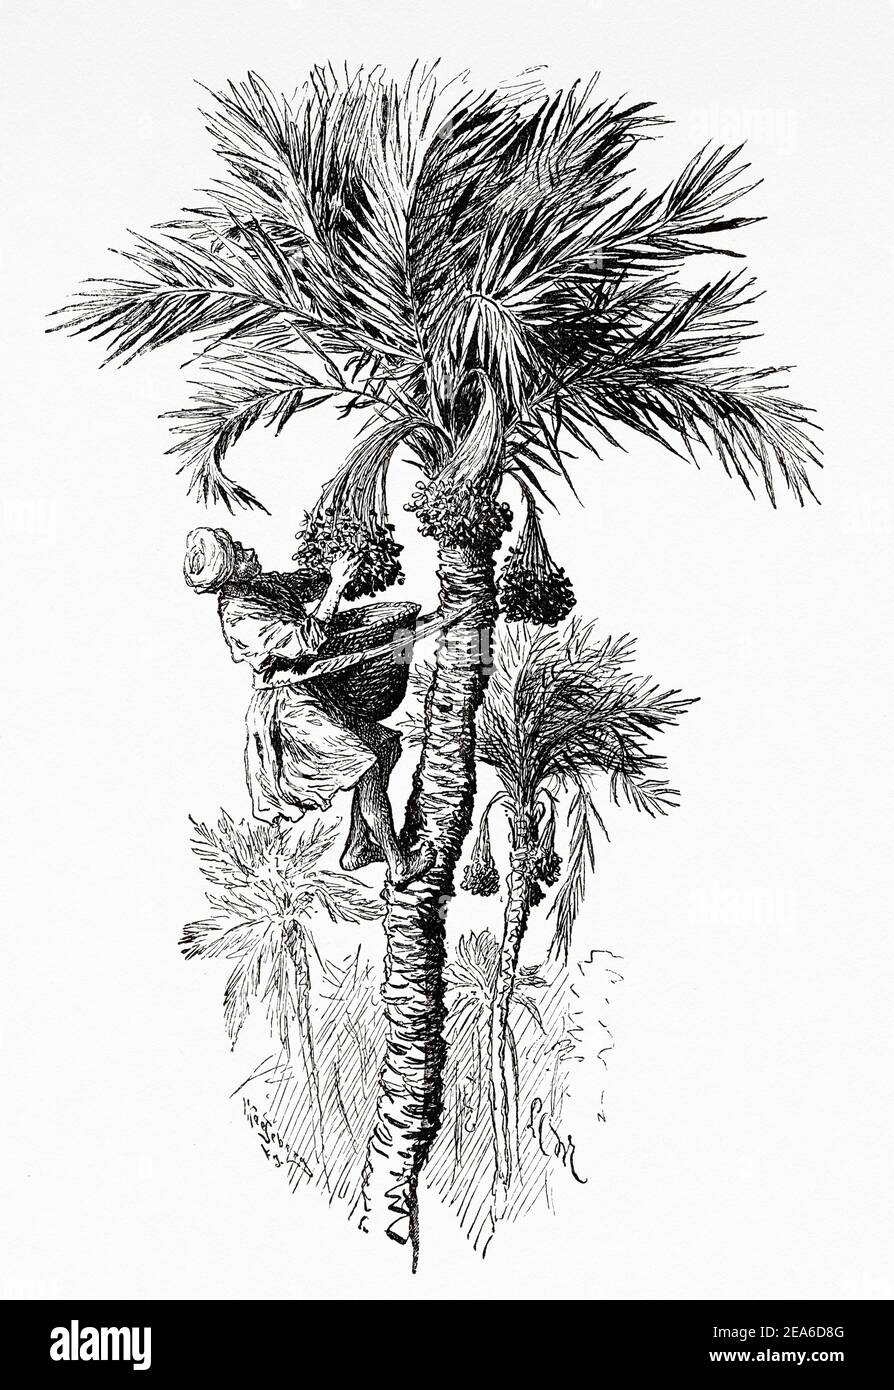 Man harvesting dates on palm trees. Ancient Egypt History. Old 19th century engraved illustration from El Mundo Ilustrado 1879 Stock Photo